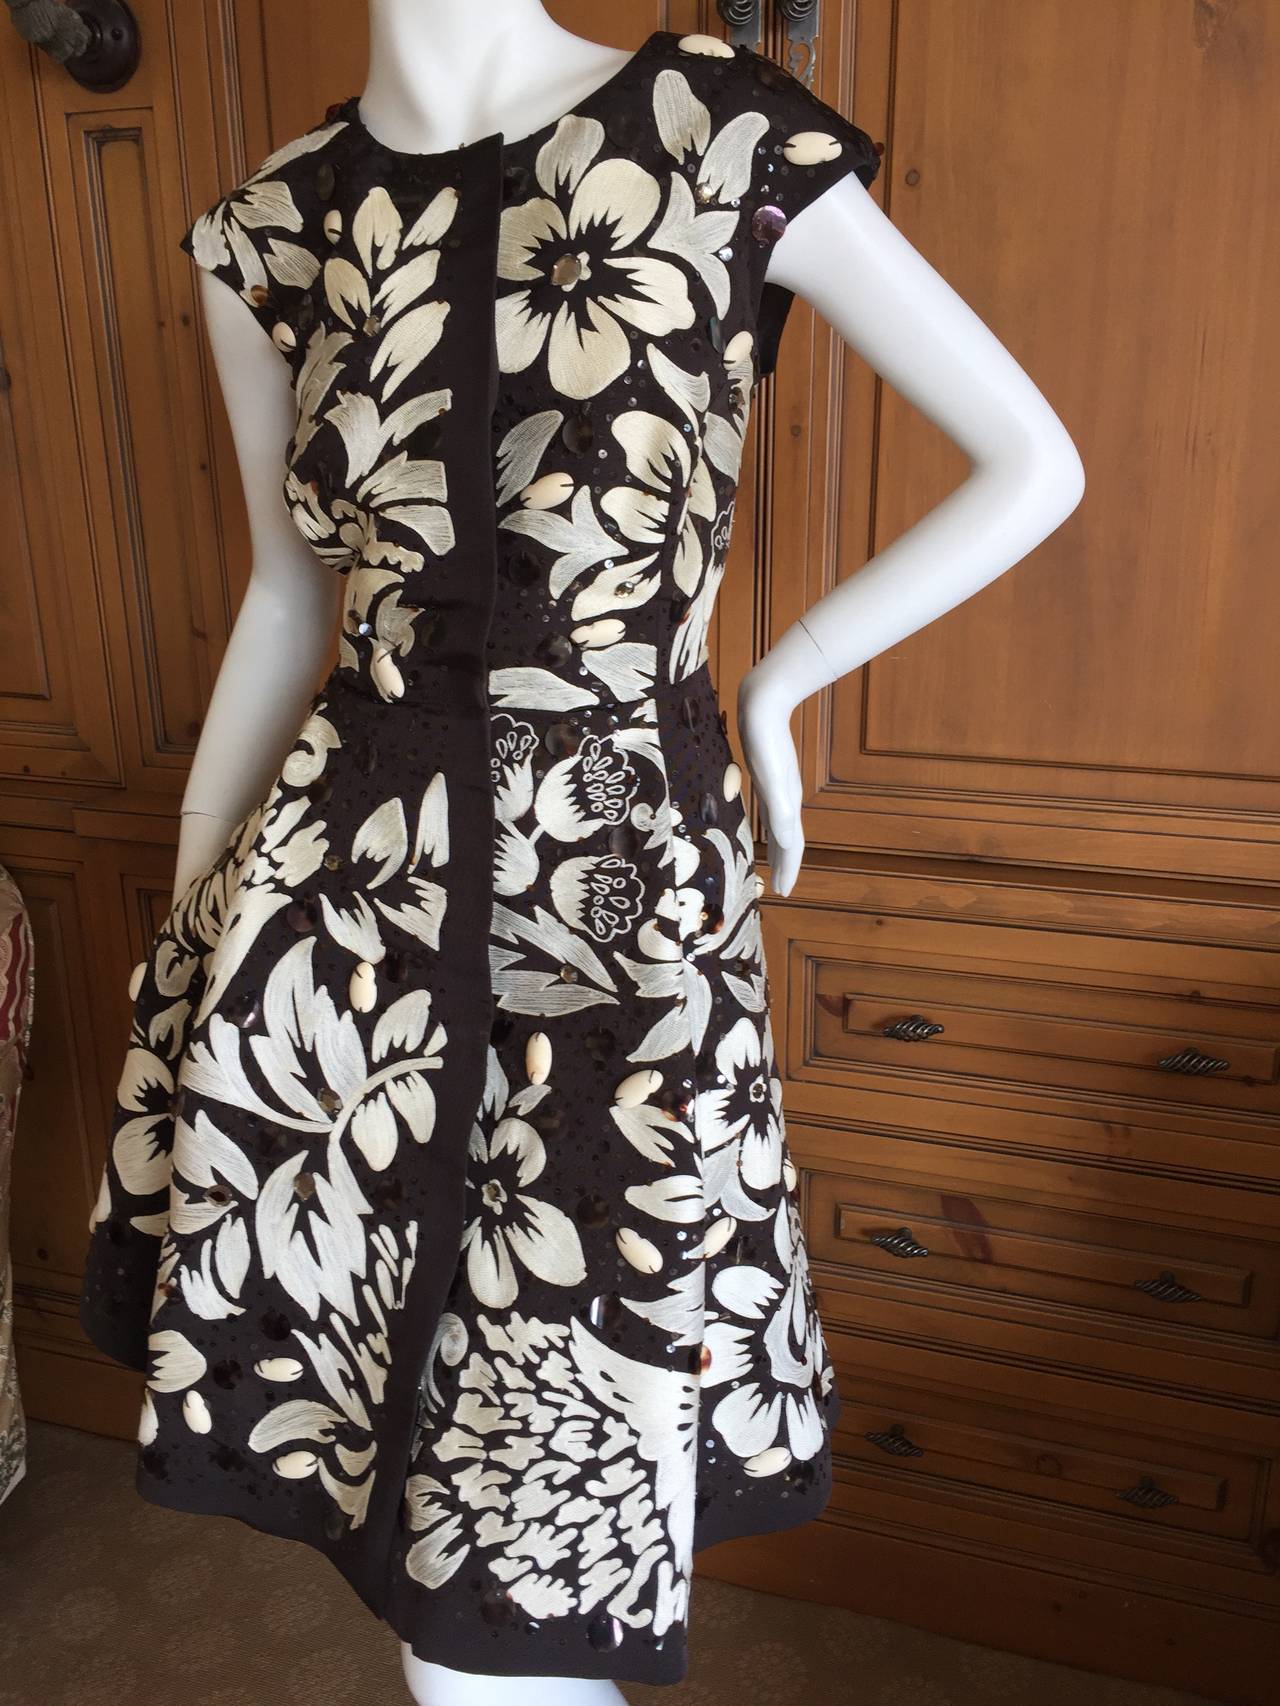 Women's Oscar de la Renta Black & White Floral Embroidered Dress Size 12